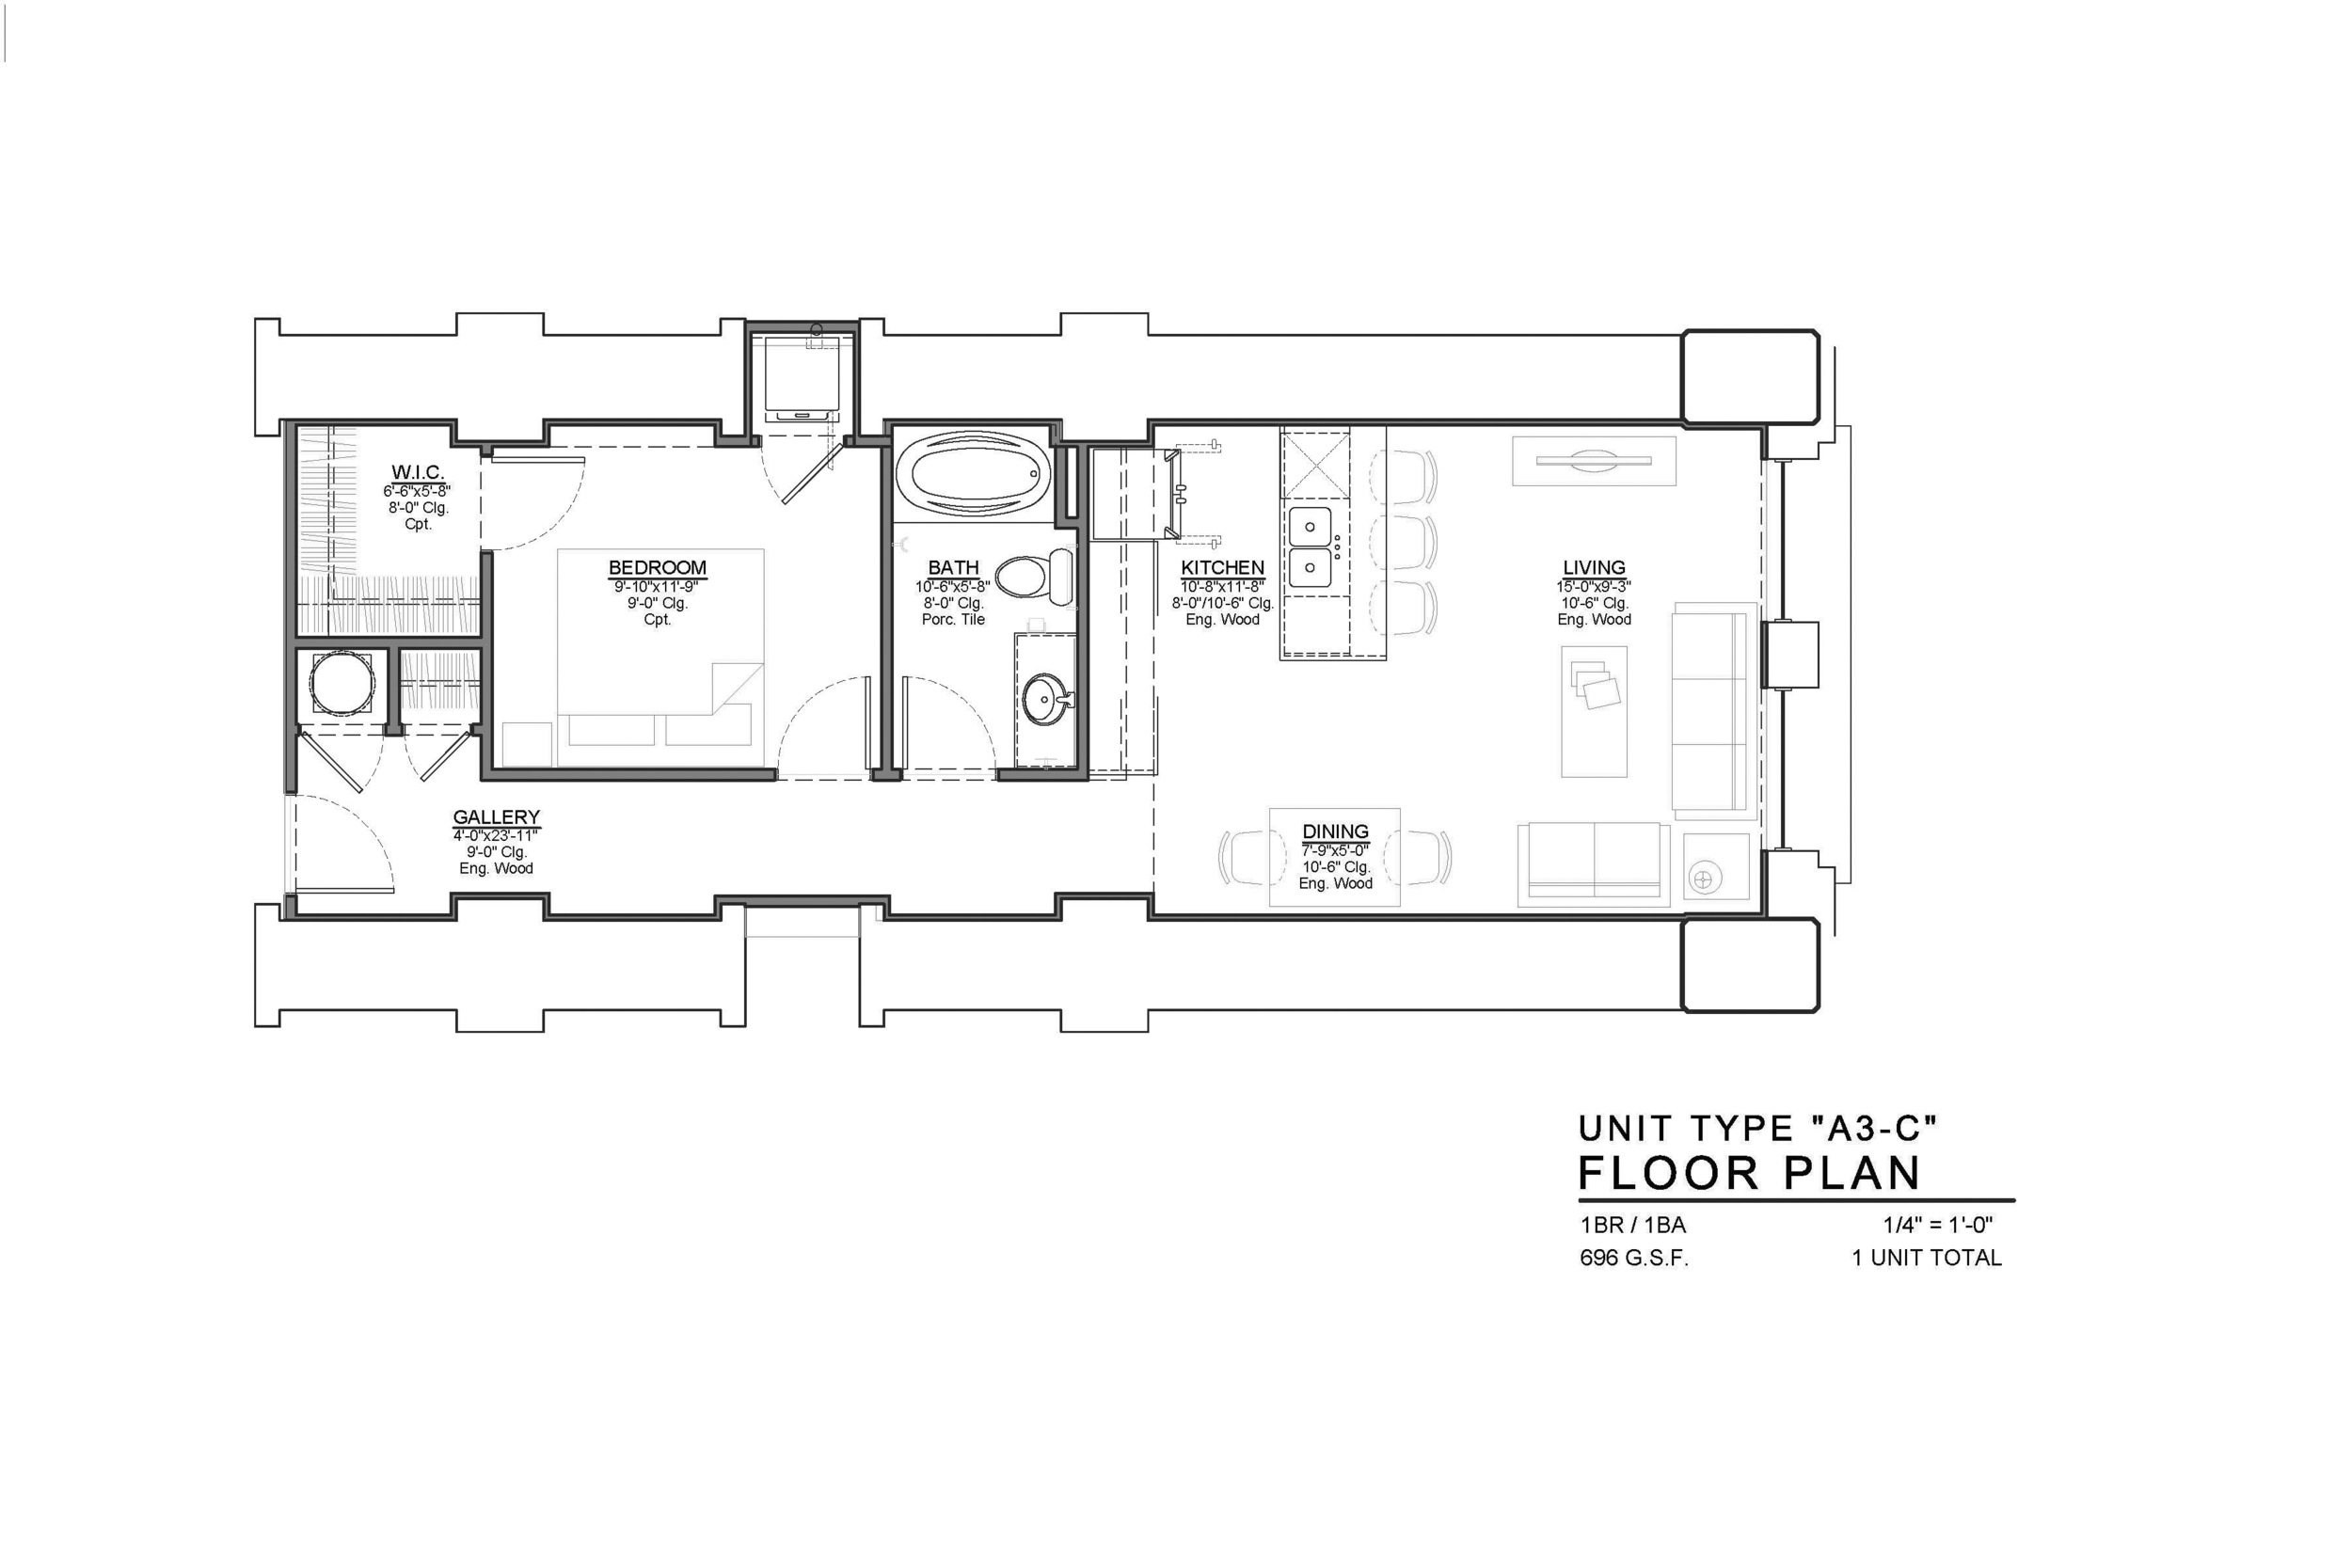 A3-C FLOOR PLAN: 1 BEDROOM / 1 BATH